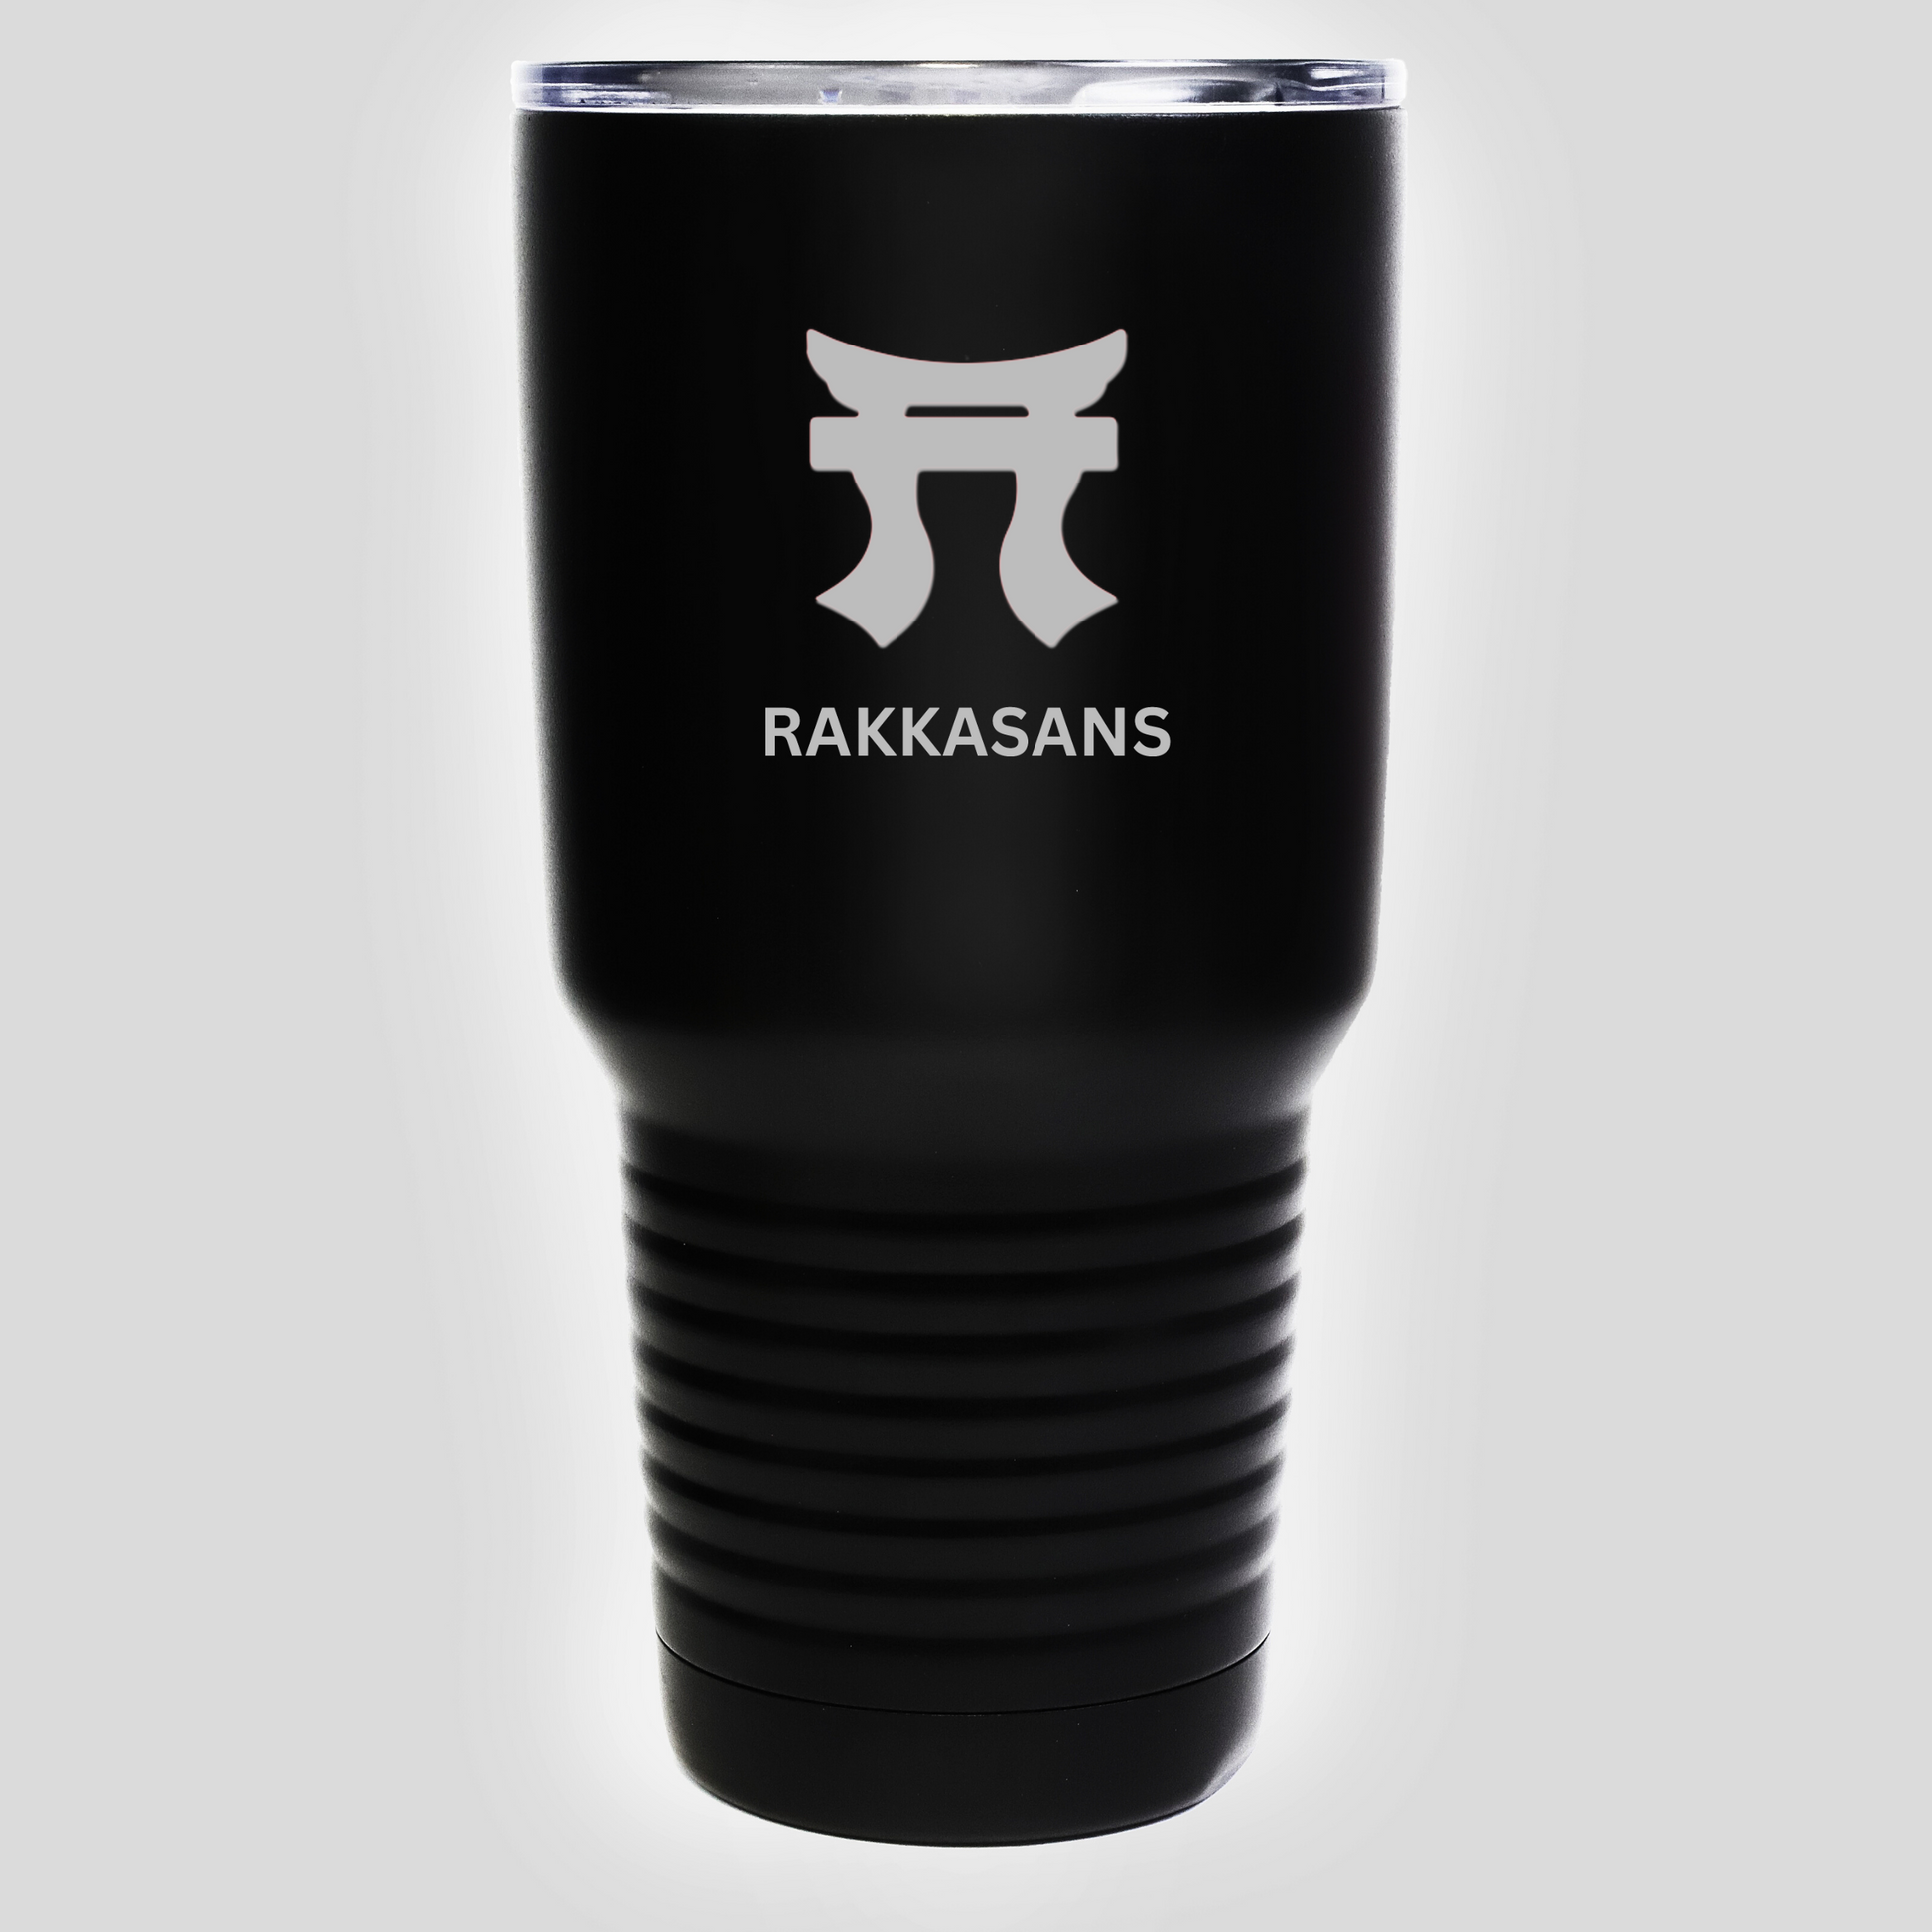 "Black Rakkasans 30oz Stainless Steel Tumbler with Laser Engraved Design."